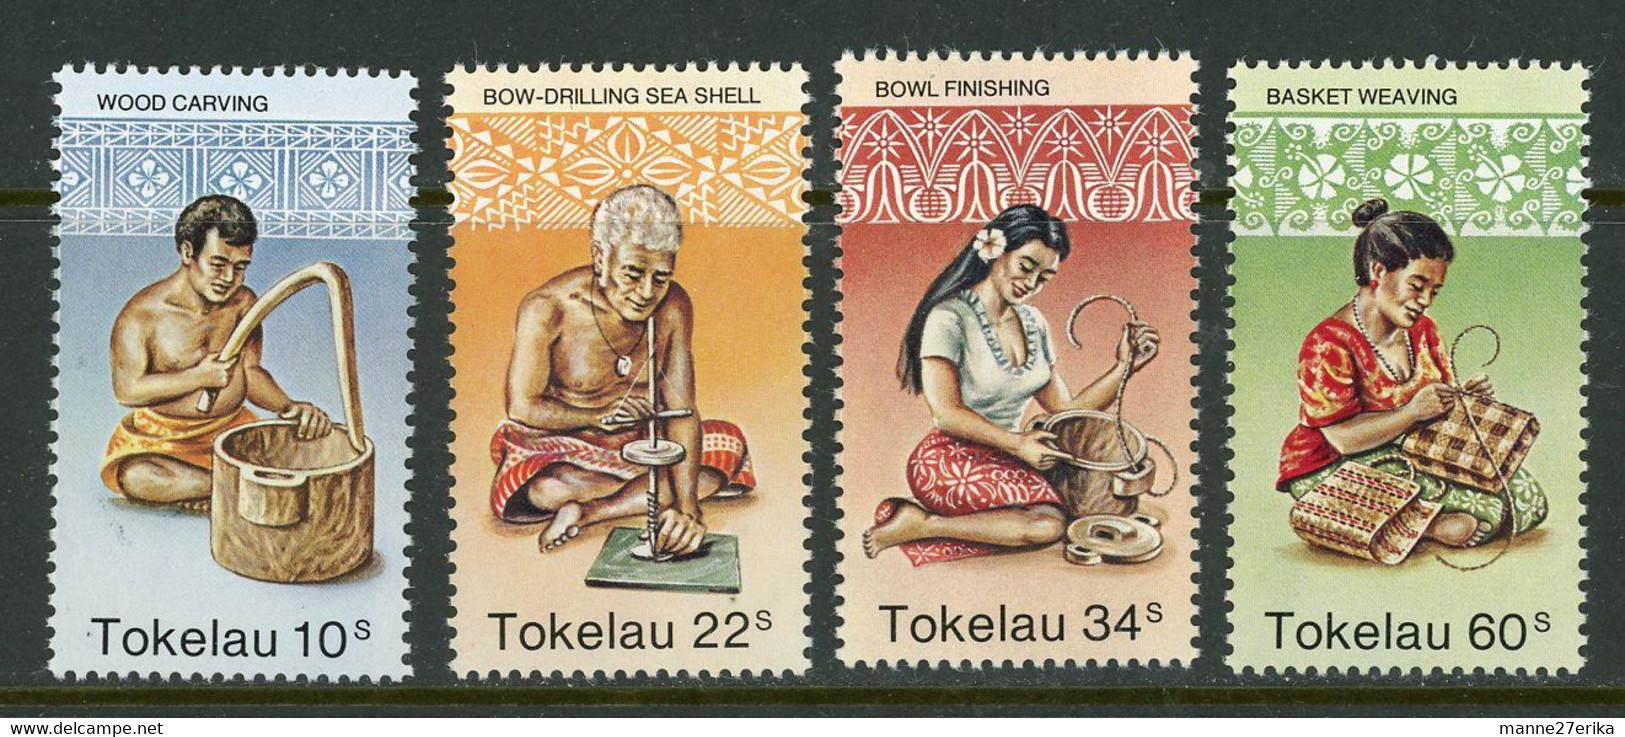 Tokelau MH 1982 - Tokelau